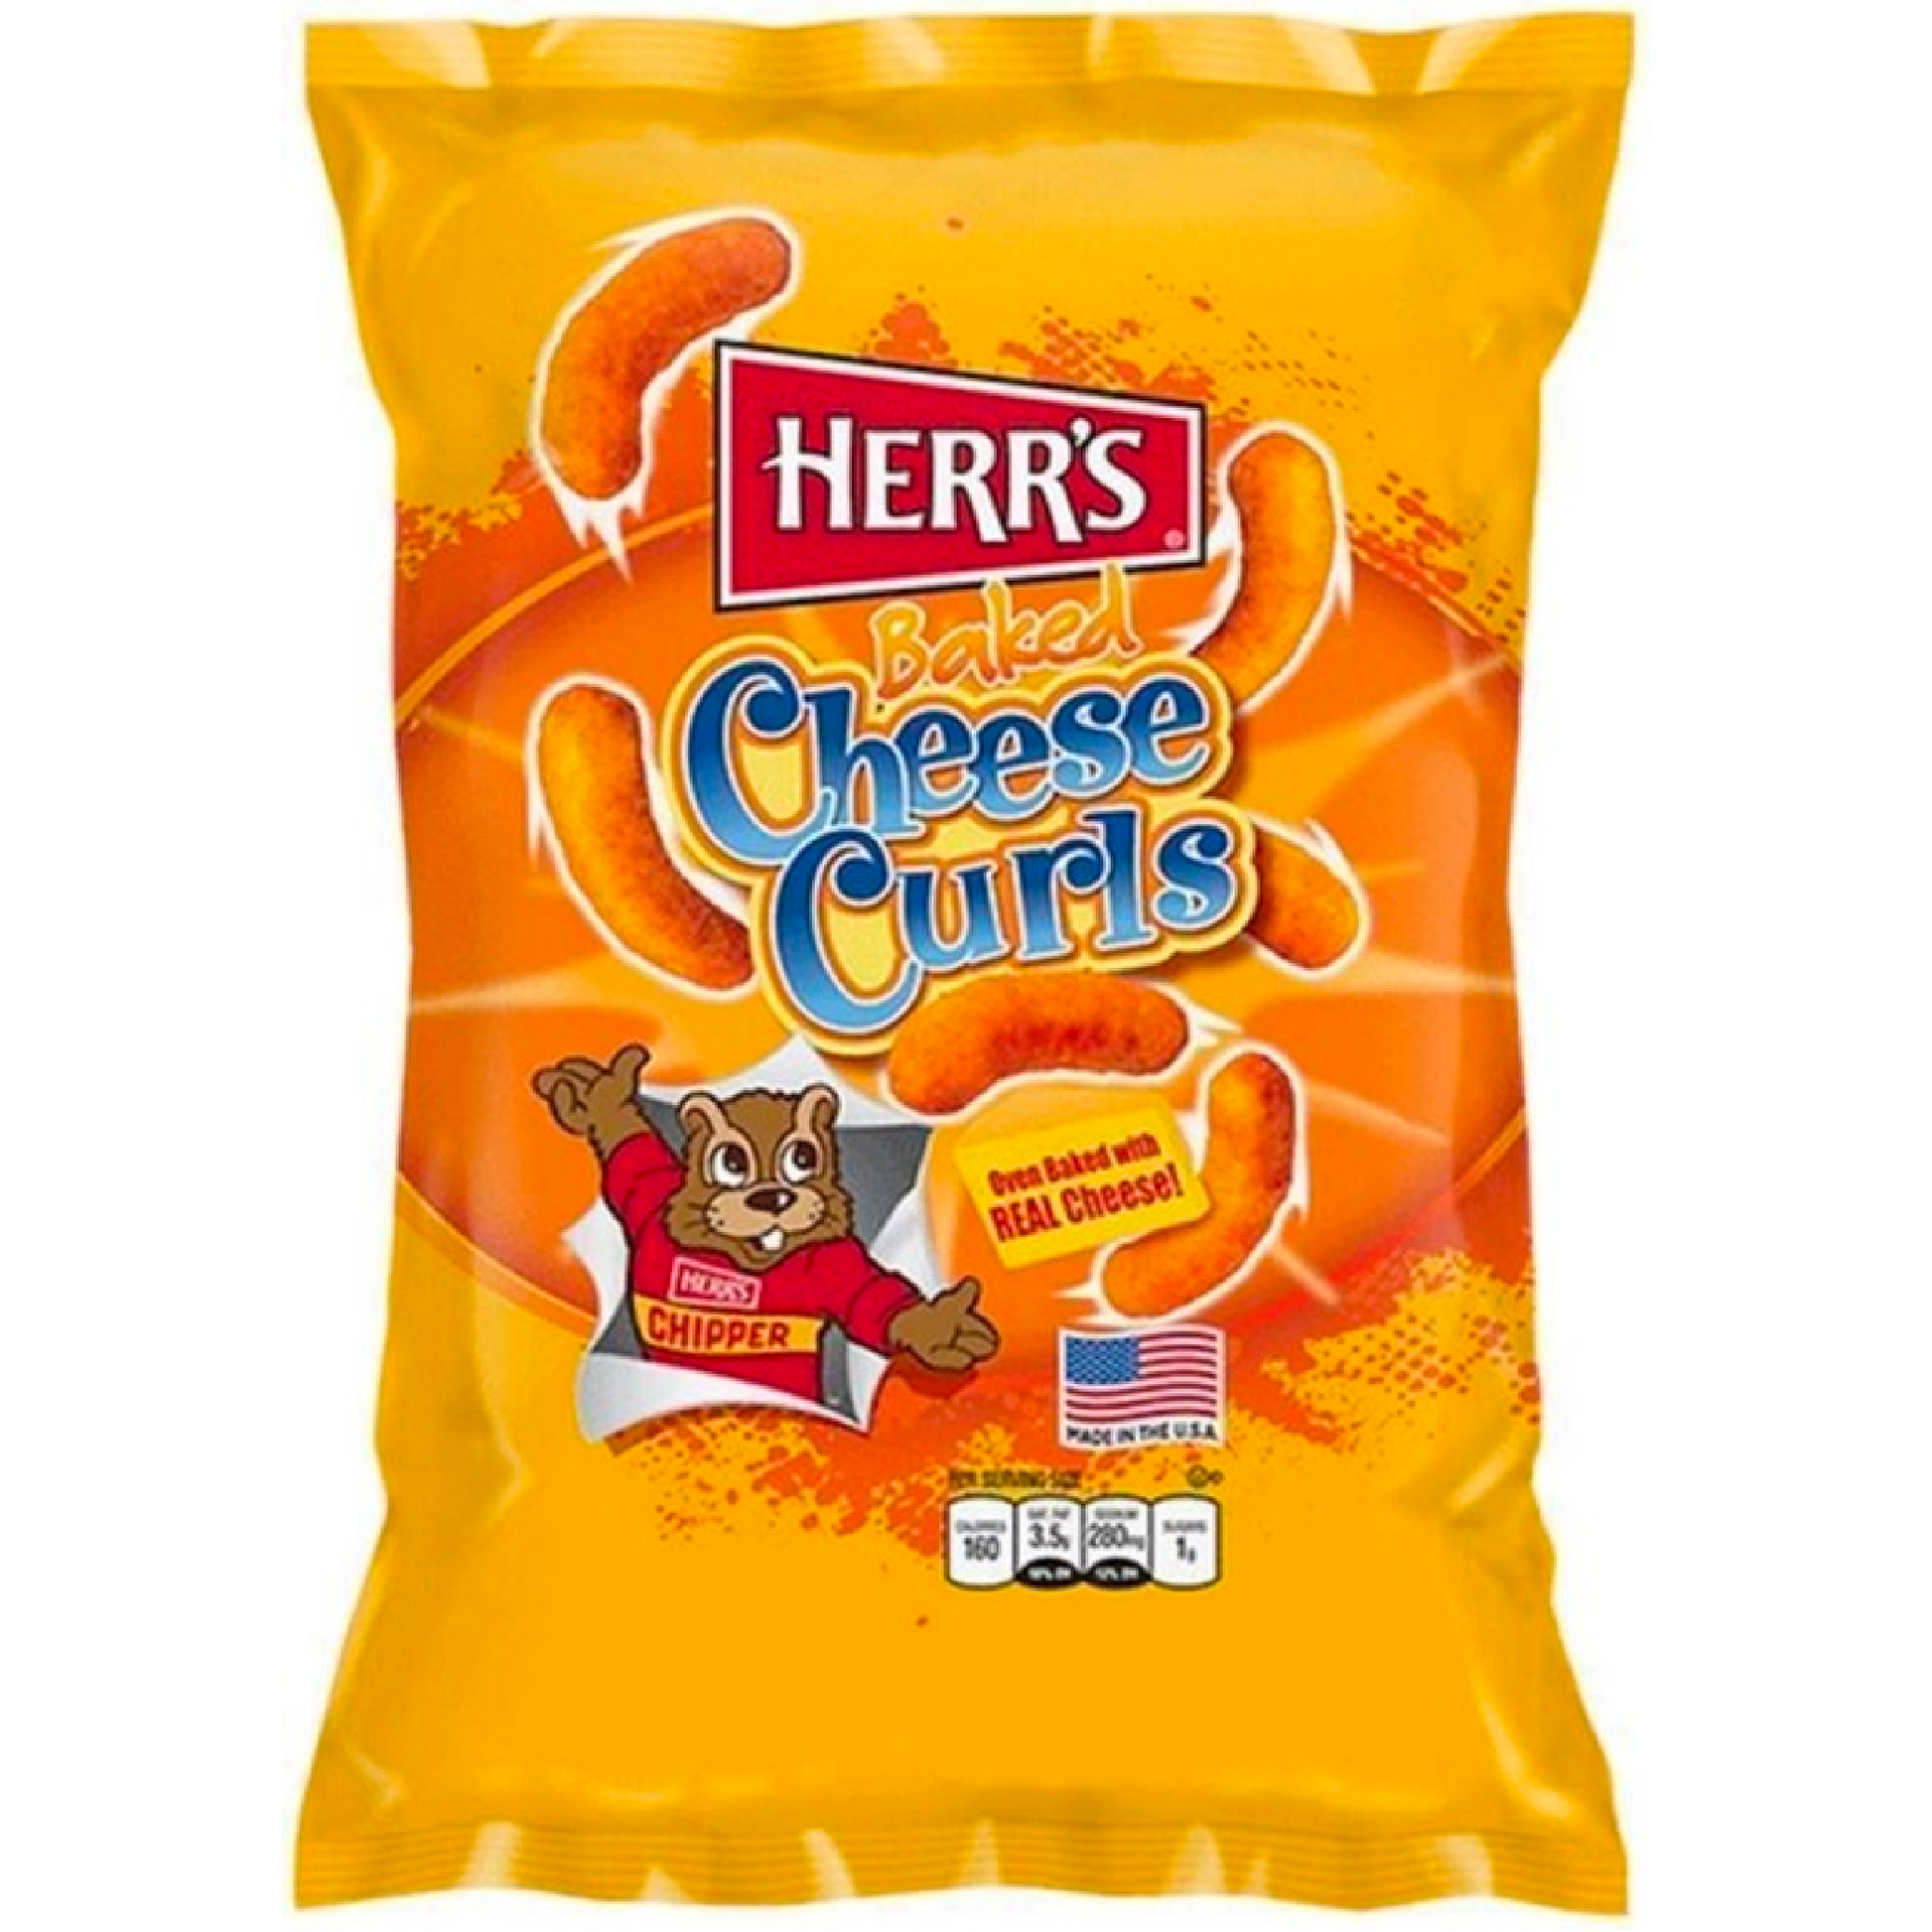 Herr's Original Cheese Curls - Snack-It